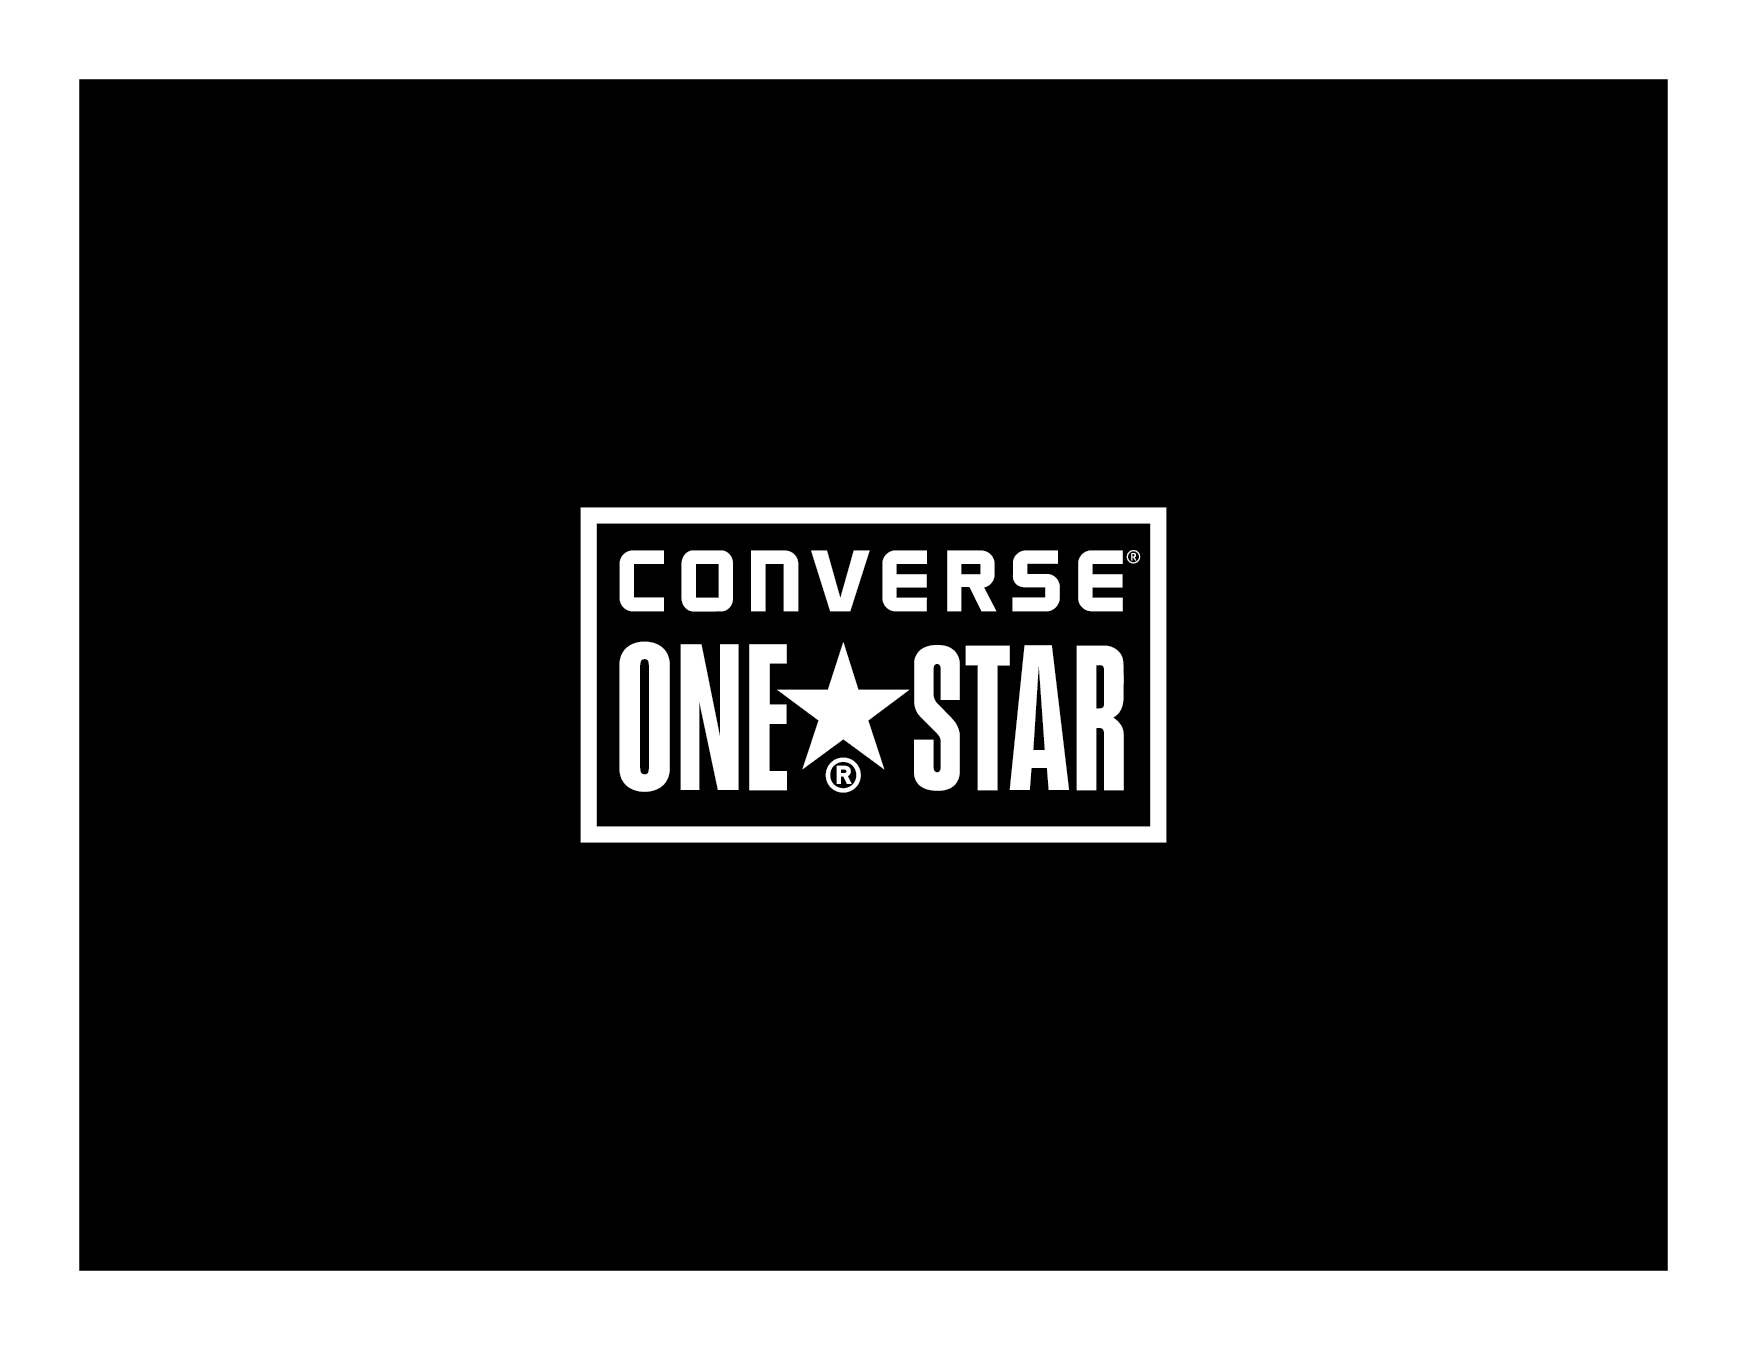 Converse One Star logo design